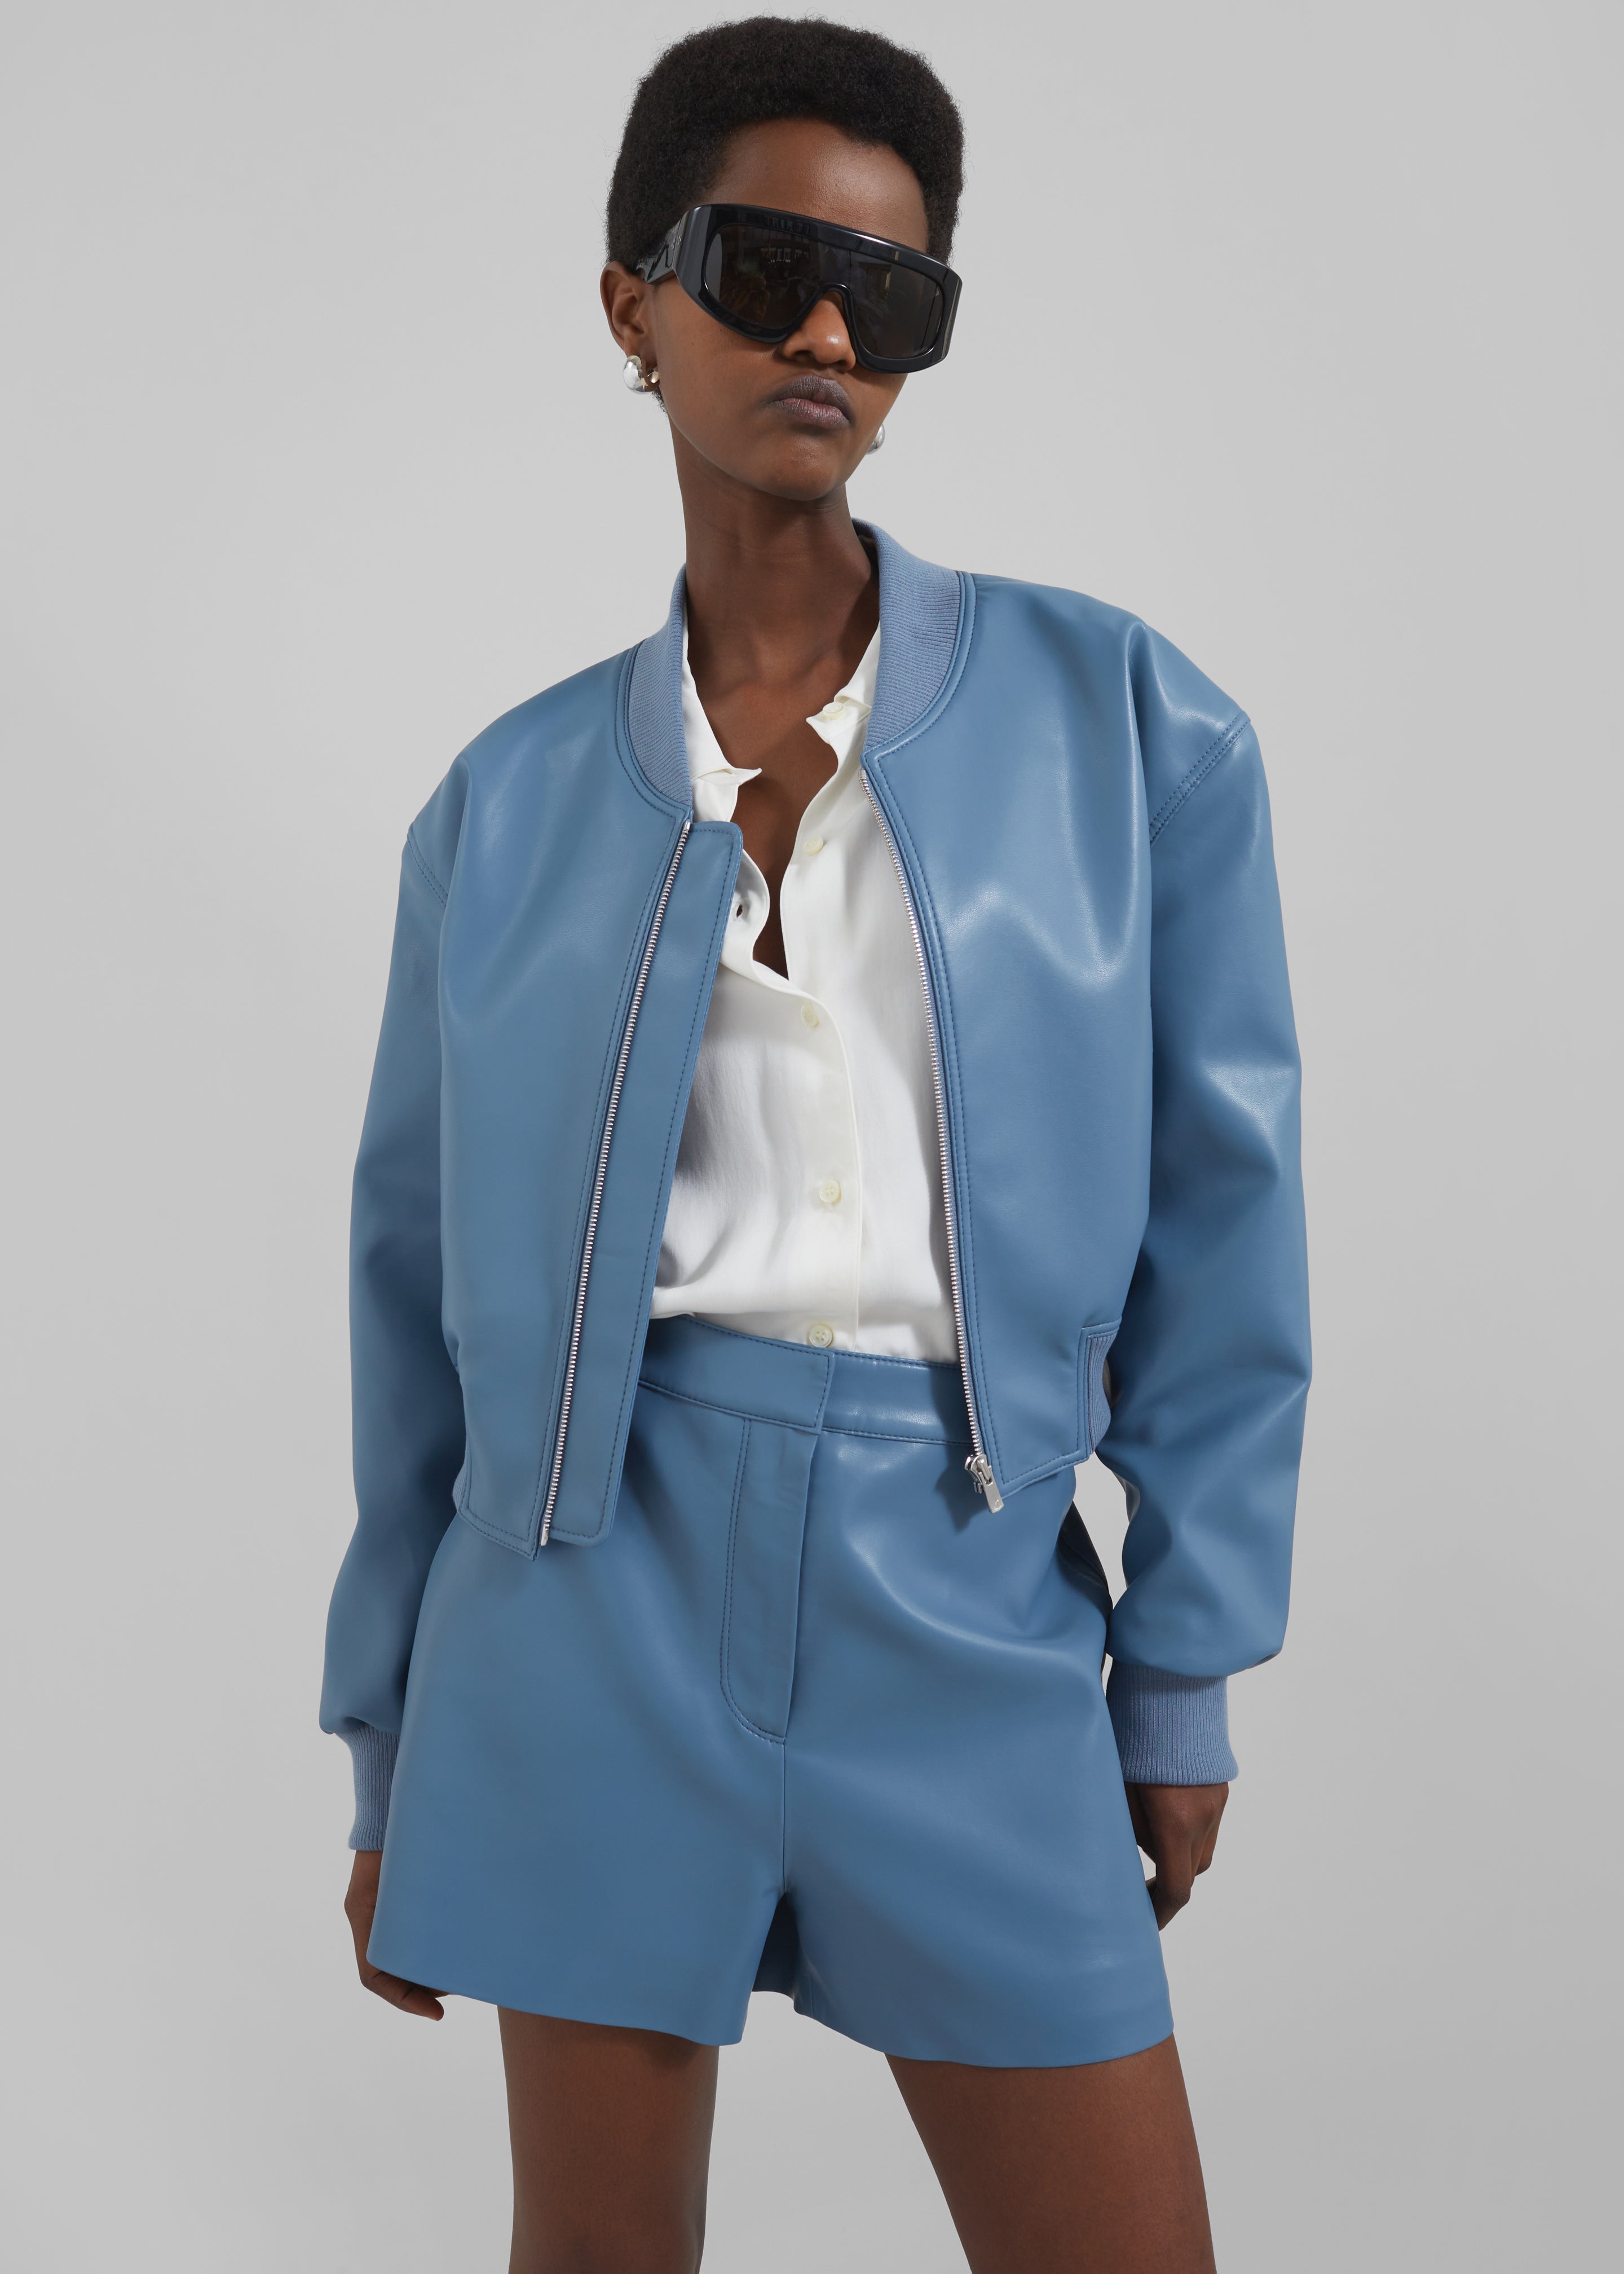 Women's Coats, Jackets, Trench & Blazer – Page 3 – Frankie Shop Europe